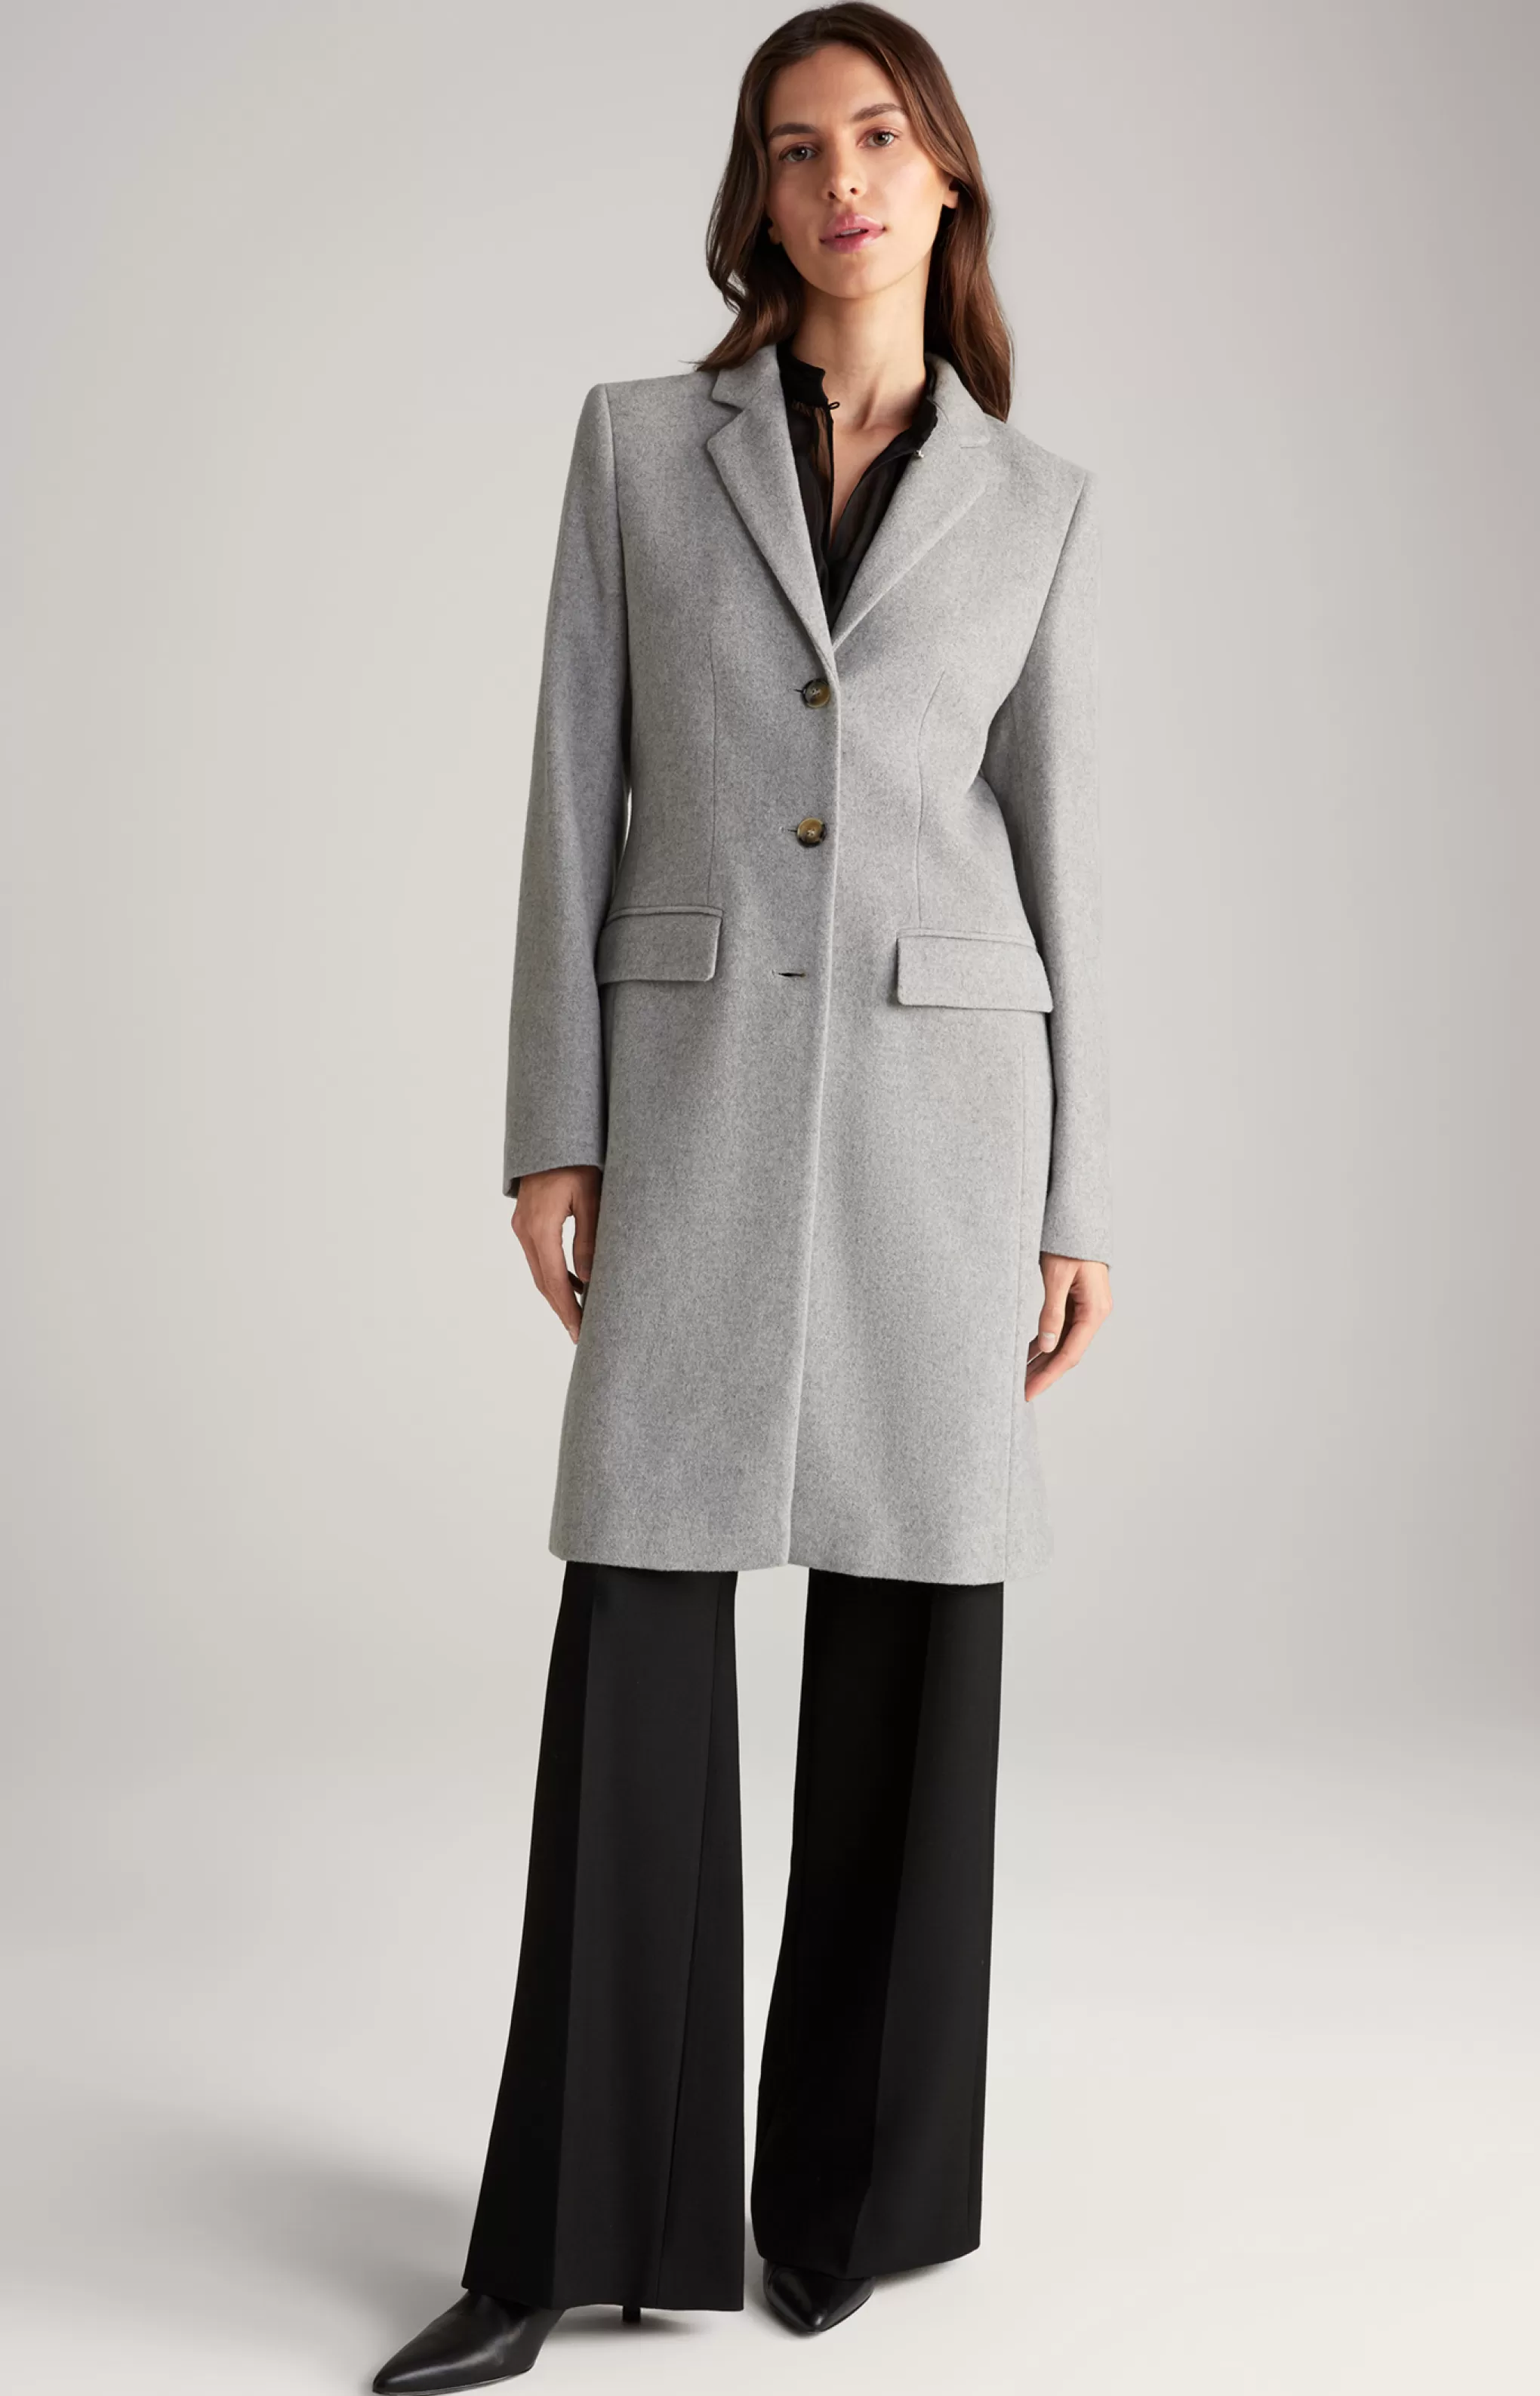 Jackets And Coats | Clothing*JOOP Jackets And Coats | Clothing Carly Coat in Grey Flecked